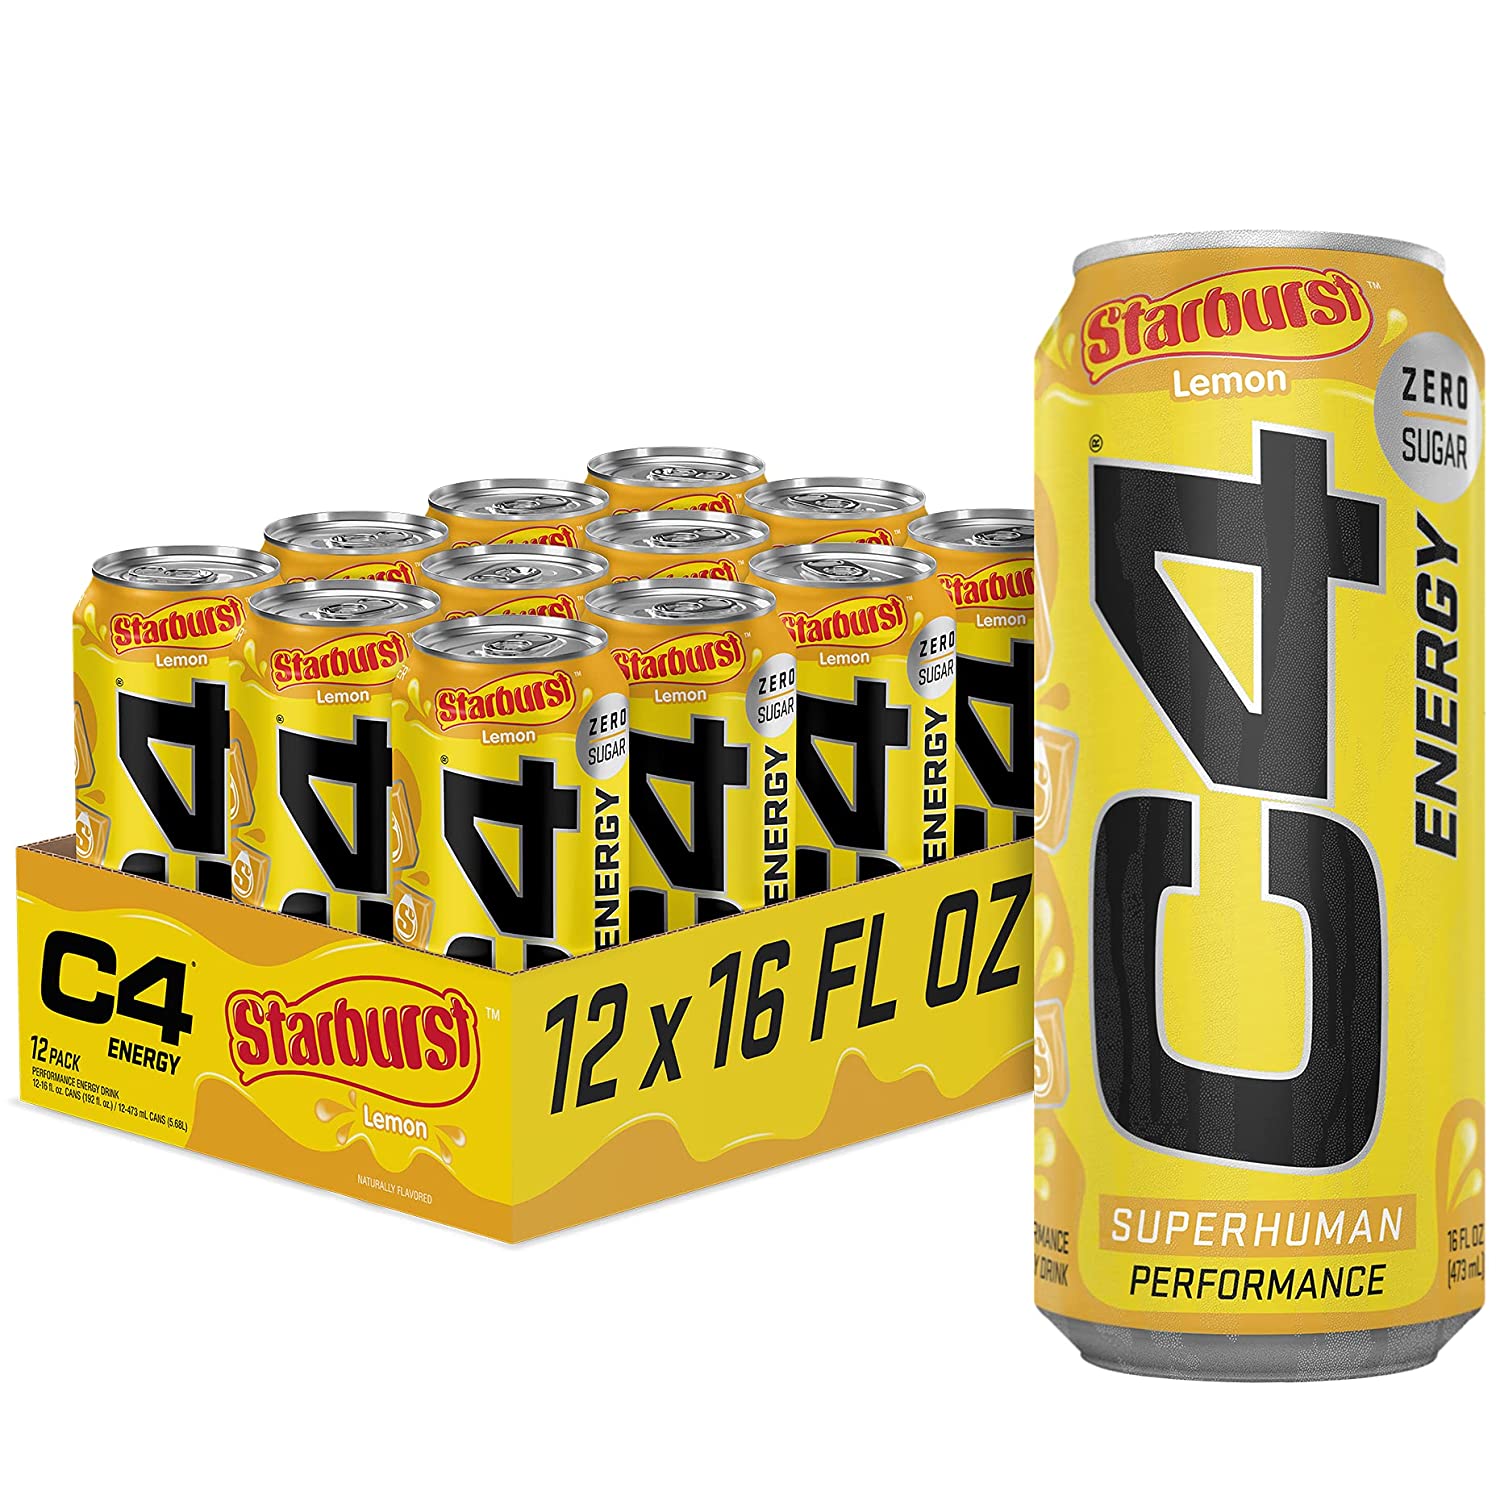 12-Pack 16-Oz Cellucor C4 Sugar Free Energy Drink (Starburst Lemon) $16.40 w/ S&S + Free S&H w/ Prime or $25+